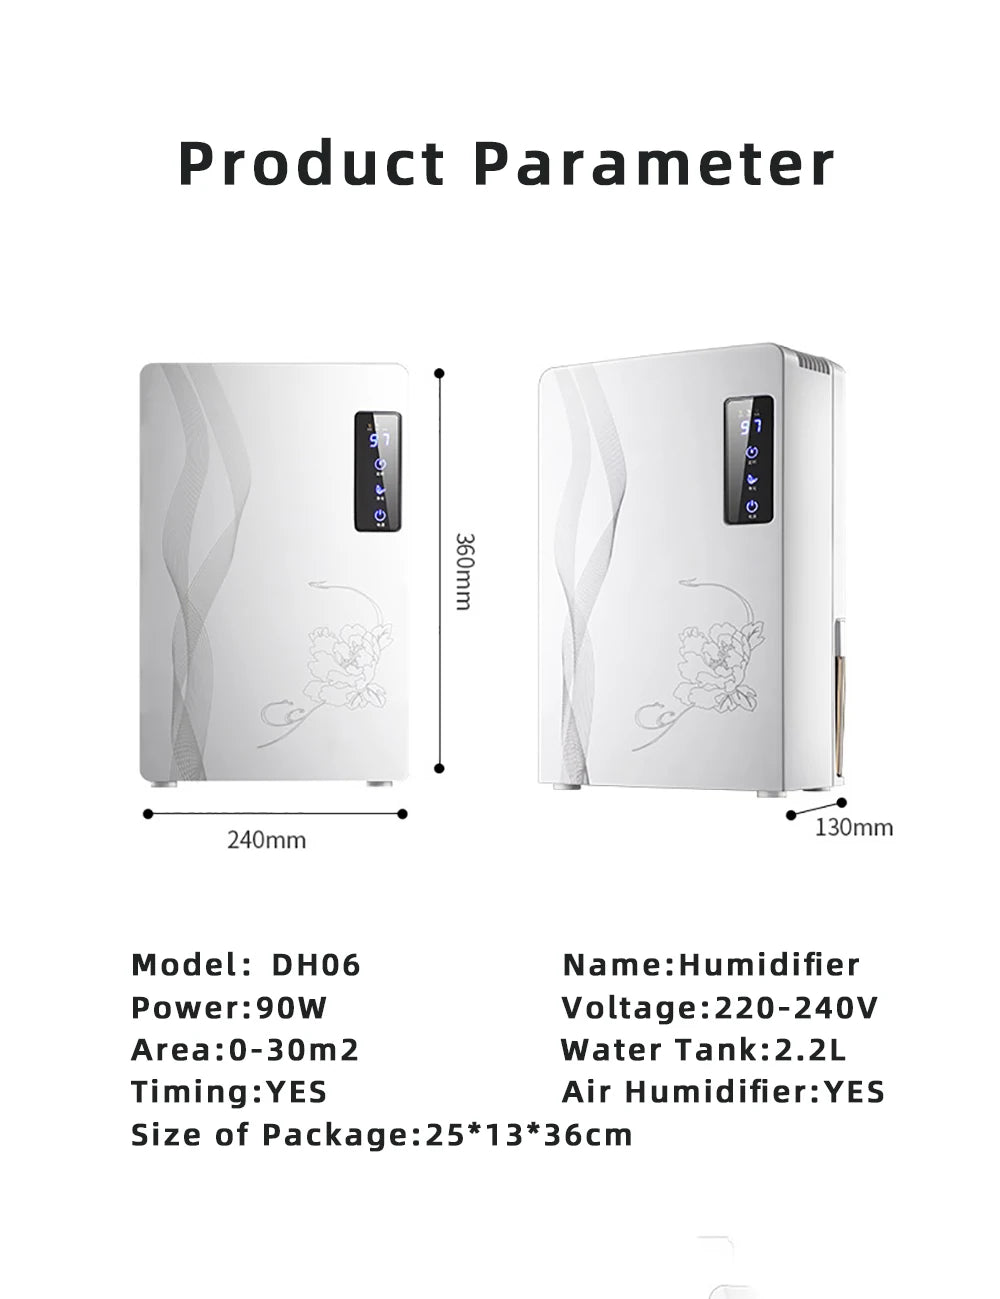 Digital Display Dehumidifier Air Purification Drier
Household Dehumidifier with Handle
Simplicity Reciprocating Compressor Dehumidifier